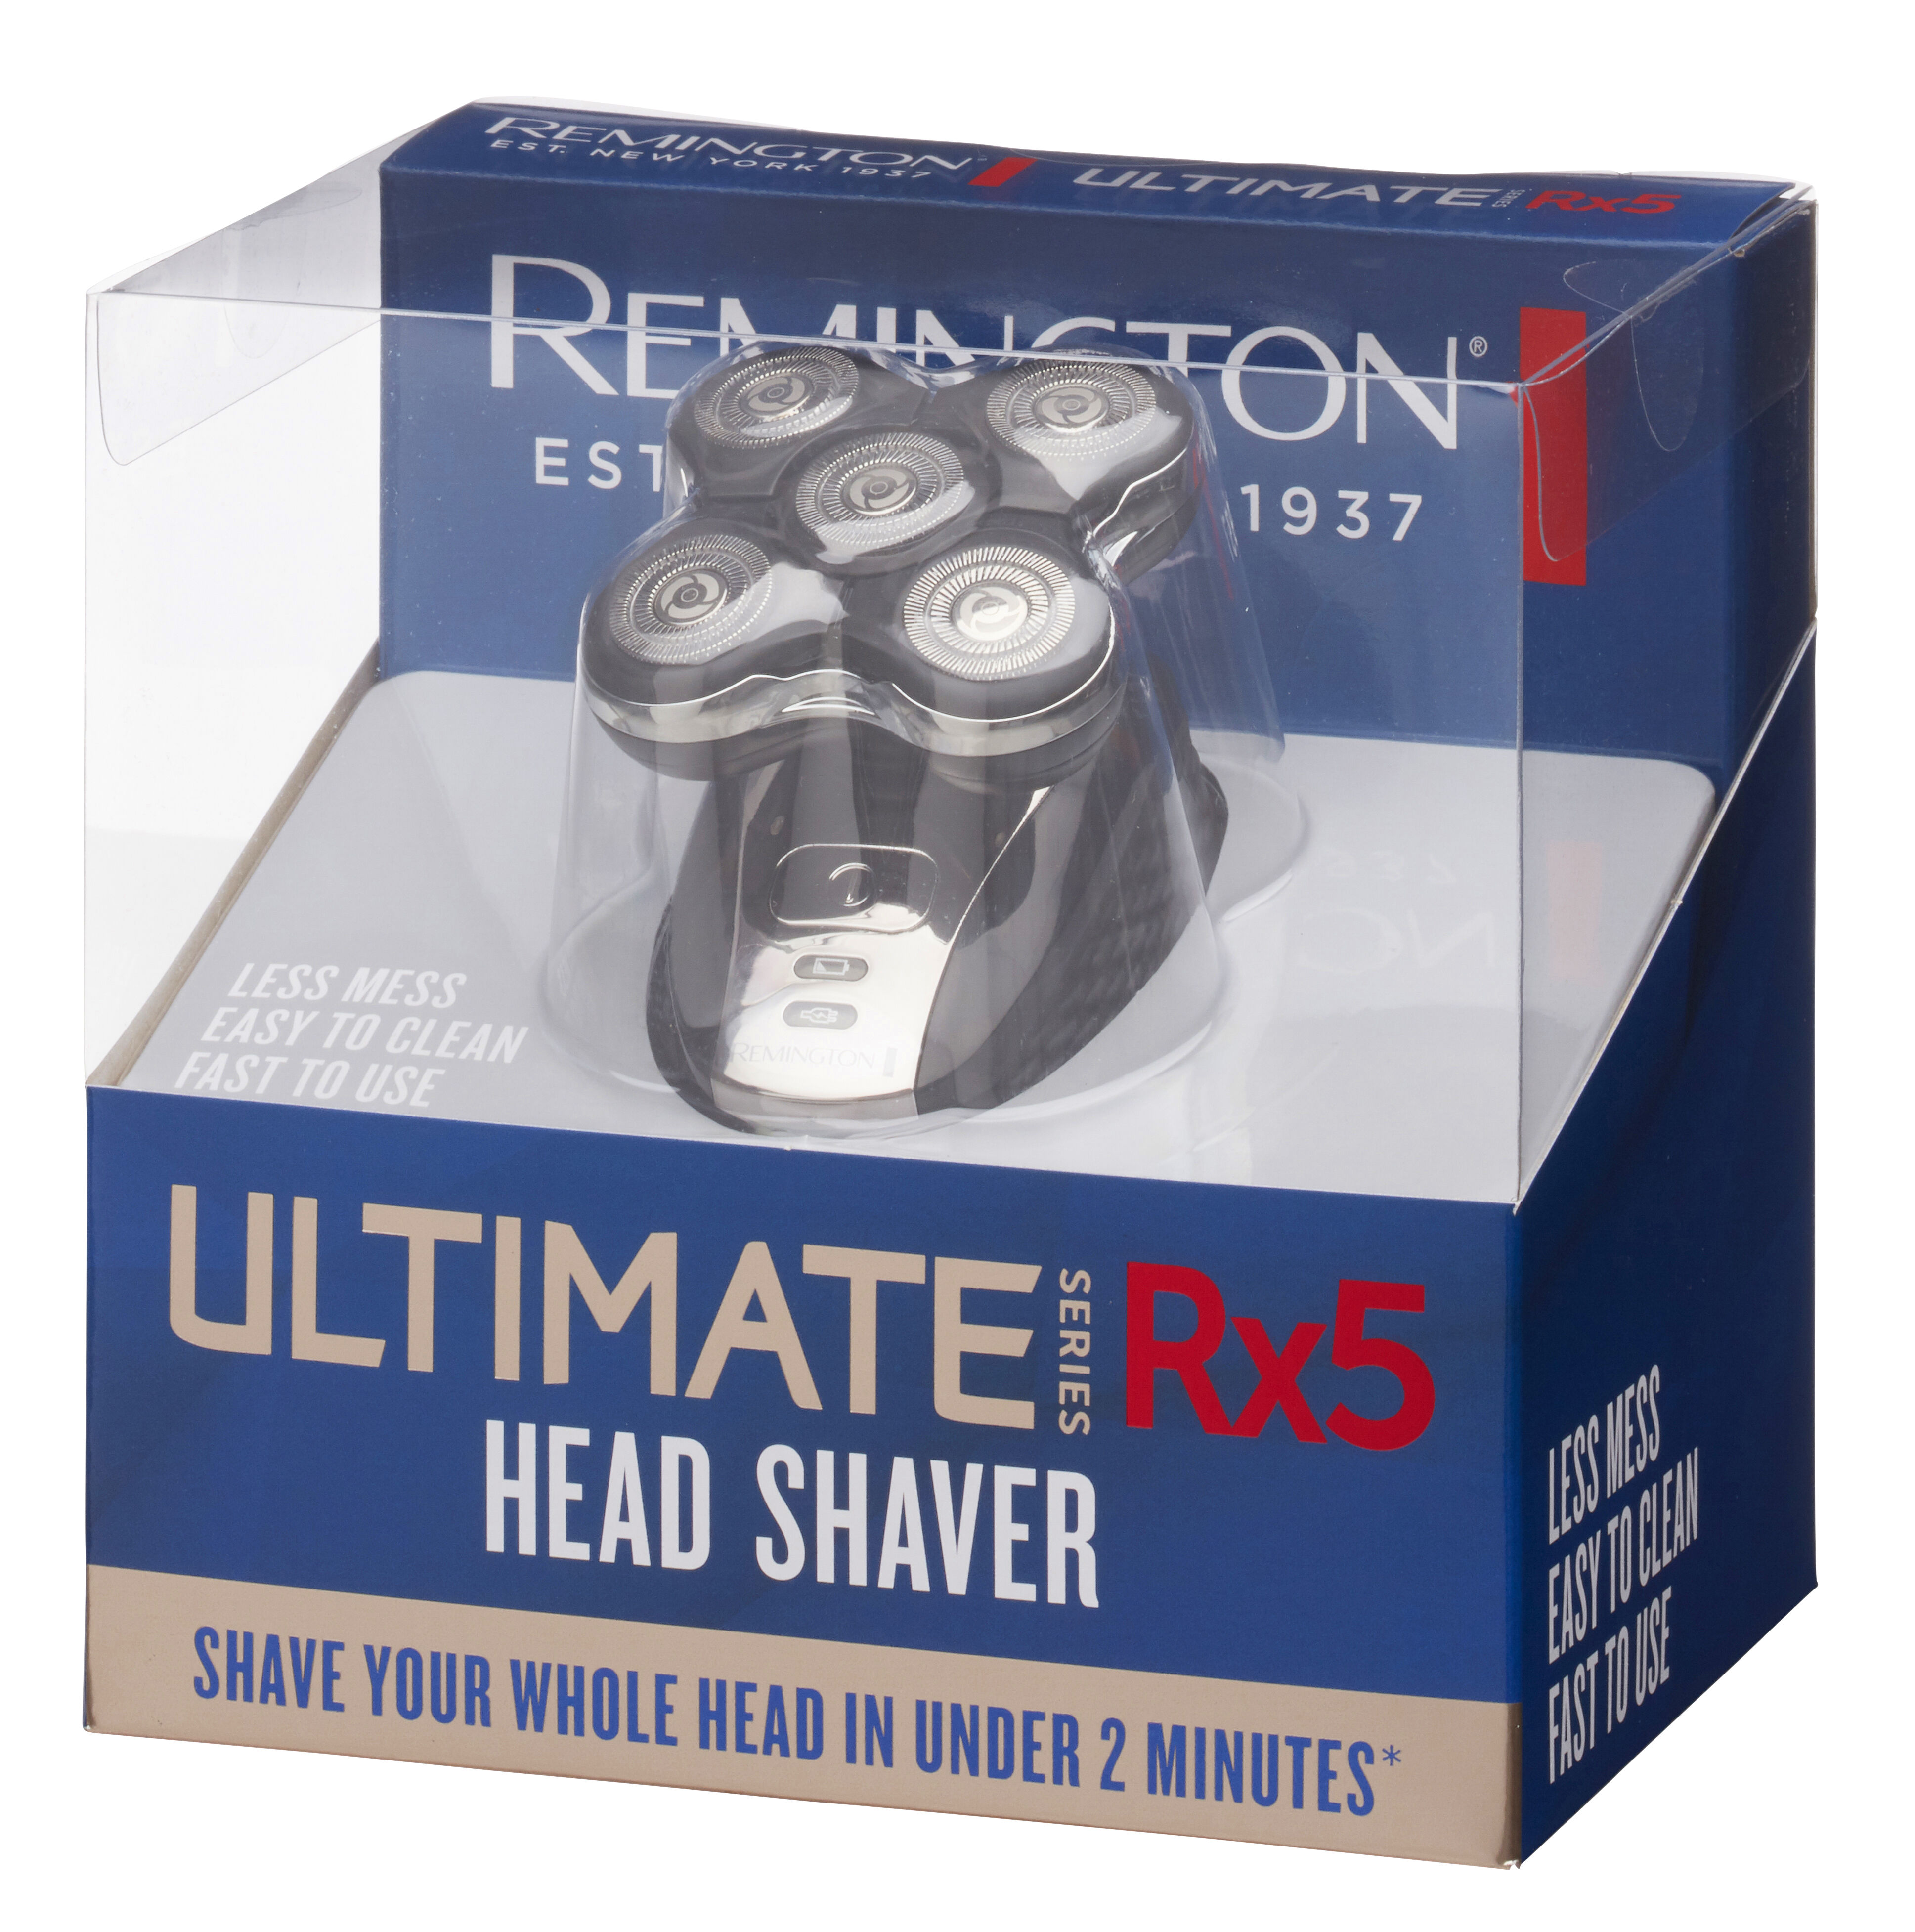 remington bald head shaver